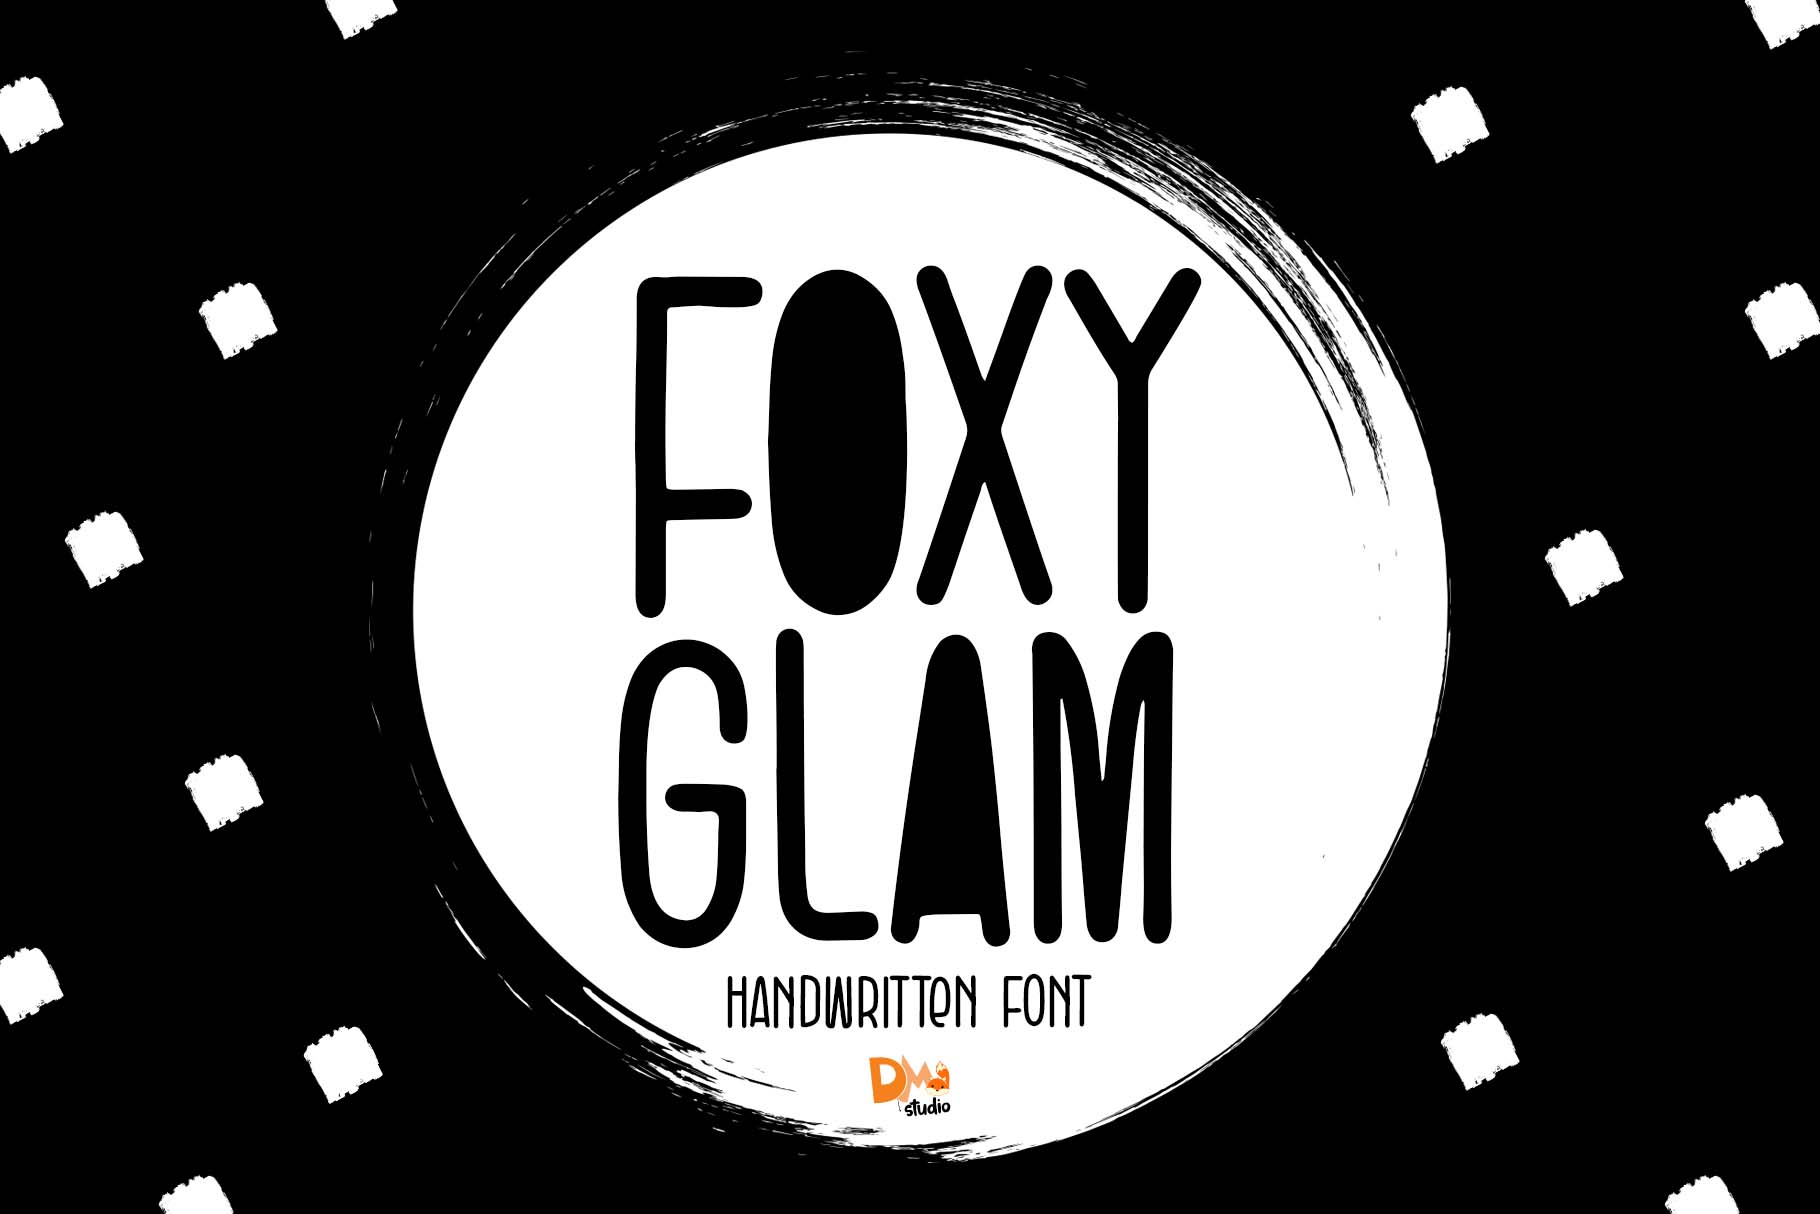 Foxy Glam